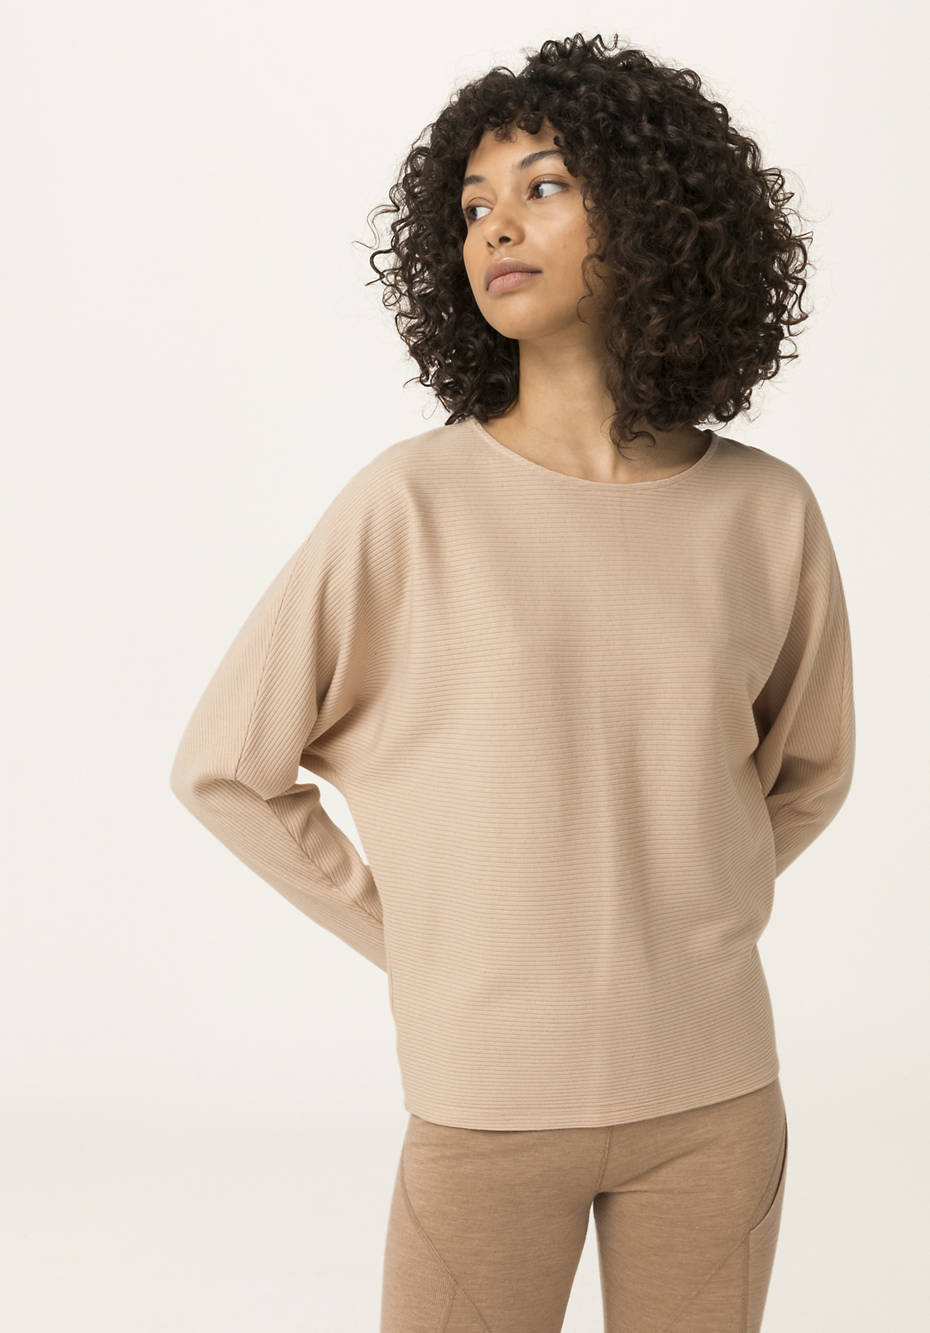 Long-sleeved shirt made from organic cotton and organic merino wool